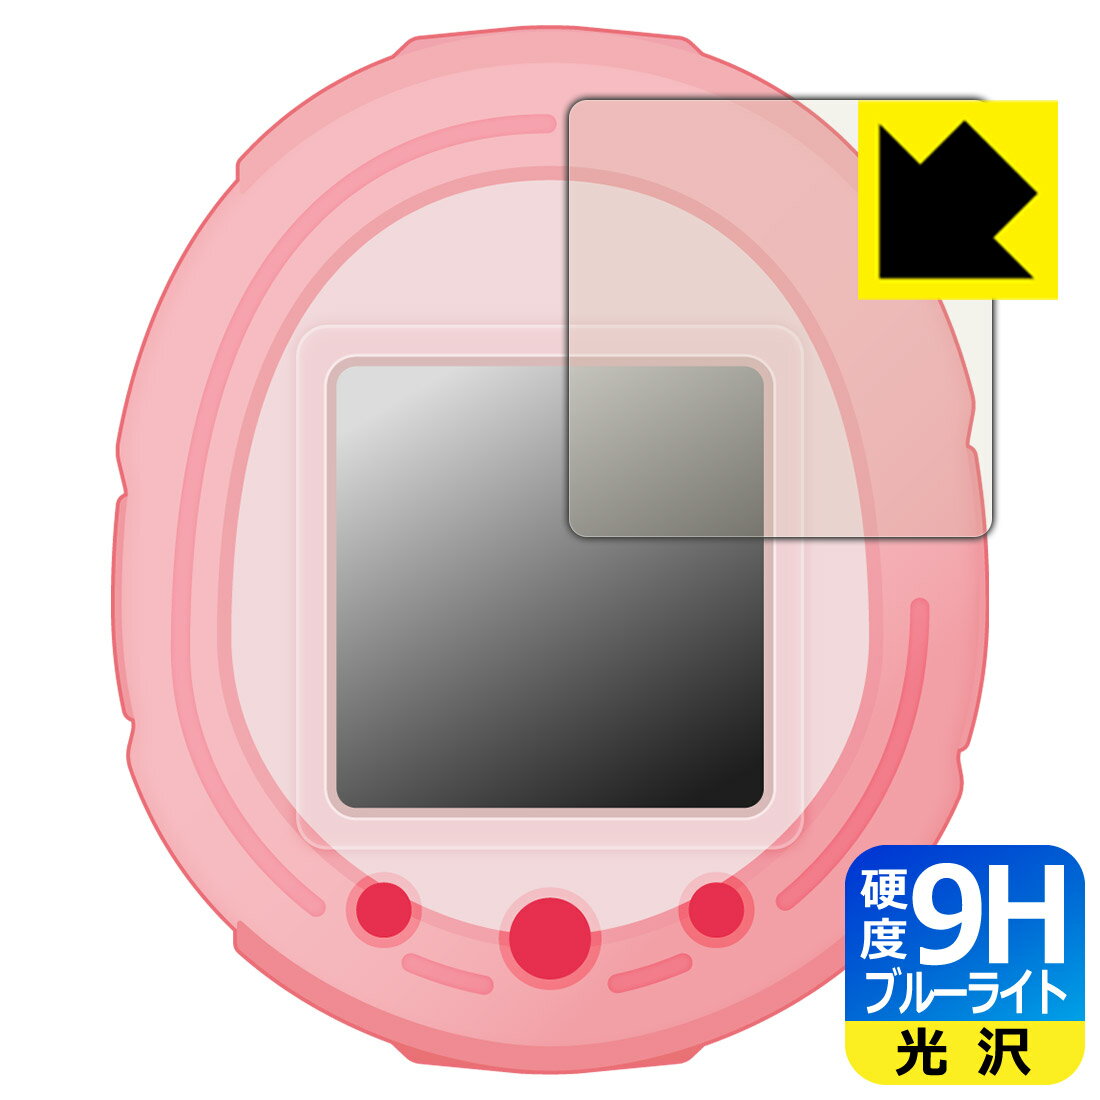 Tamagotchi Smart(たまごっちスマート)シリーズ 用 9H高硬度【ブルーライトカット】保護フィルム 日本製 自社製造直販